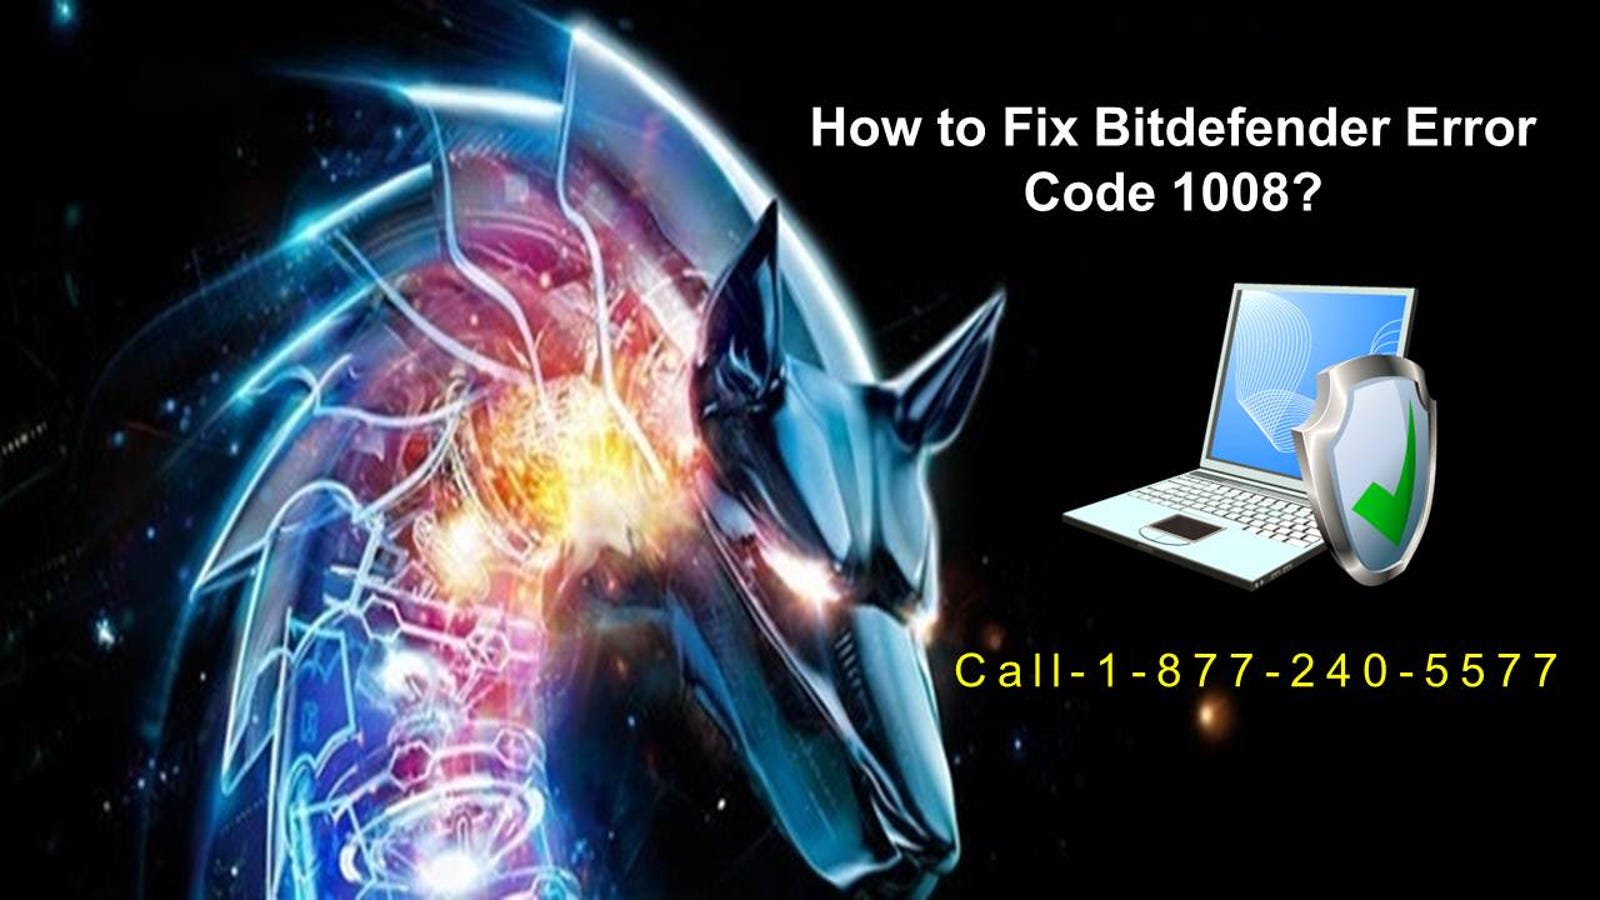 Call 1 877 240 5577 To Fix Bitdefender Error Code 1008